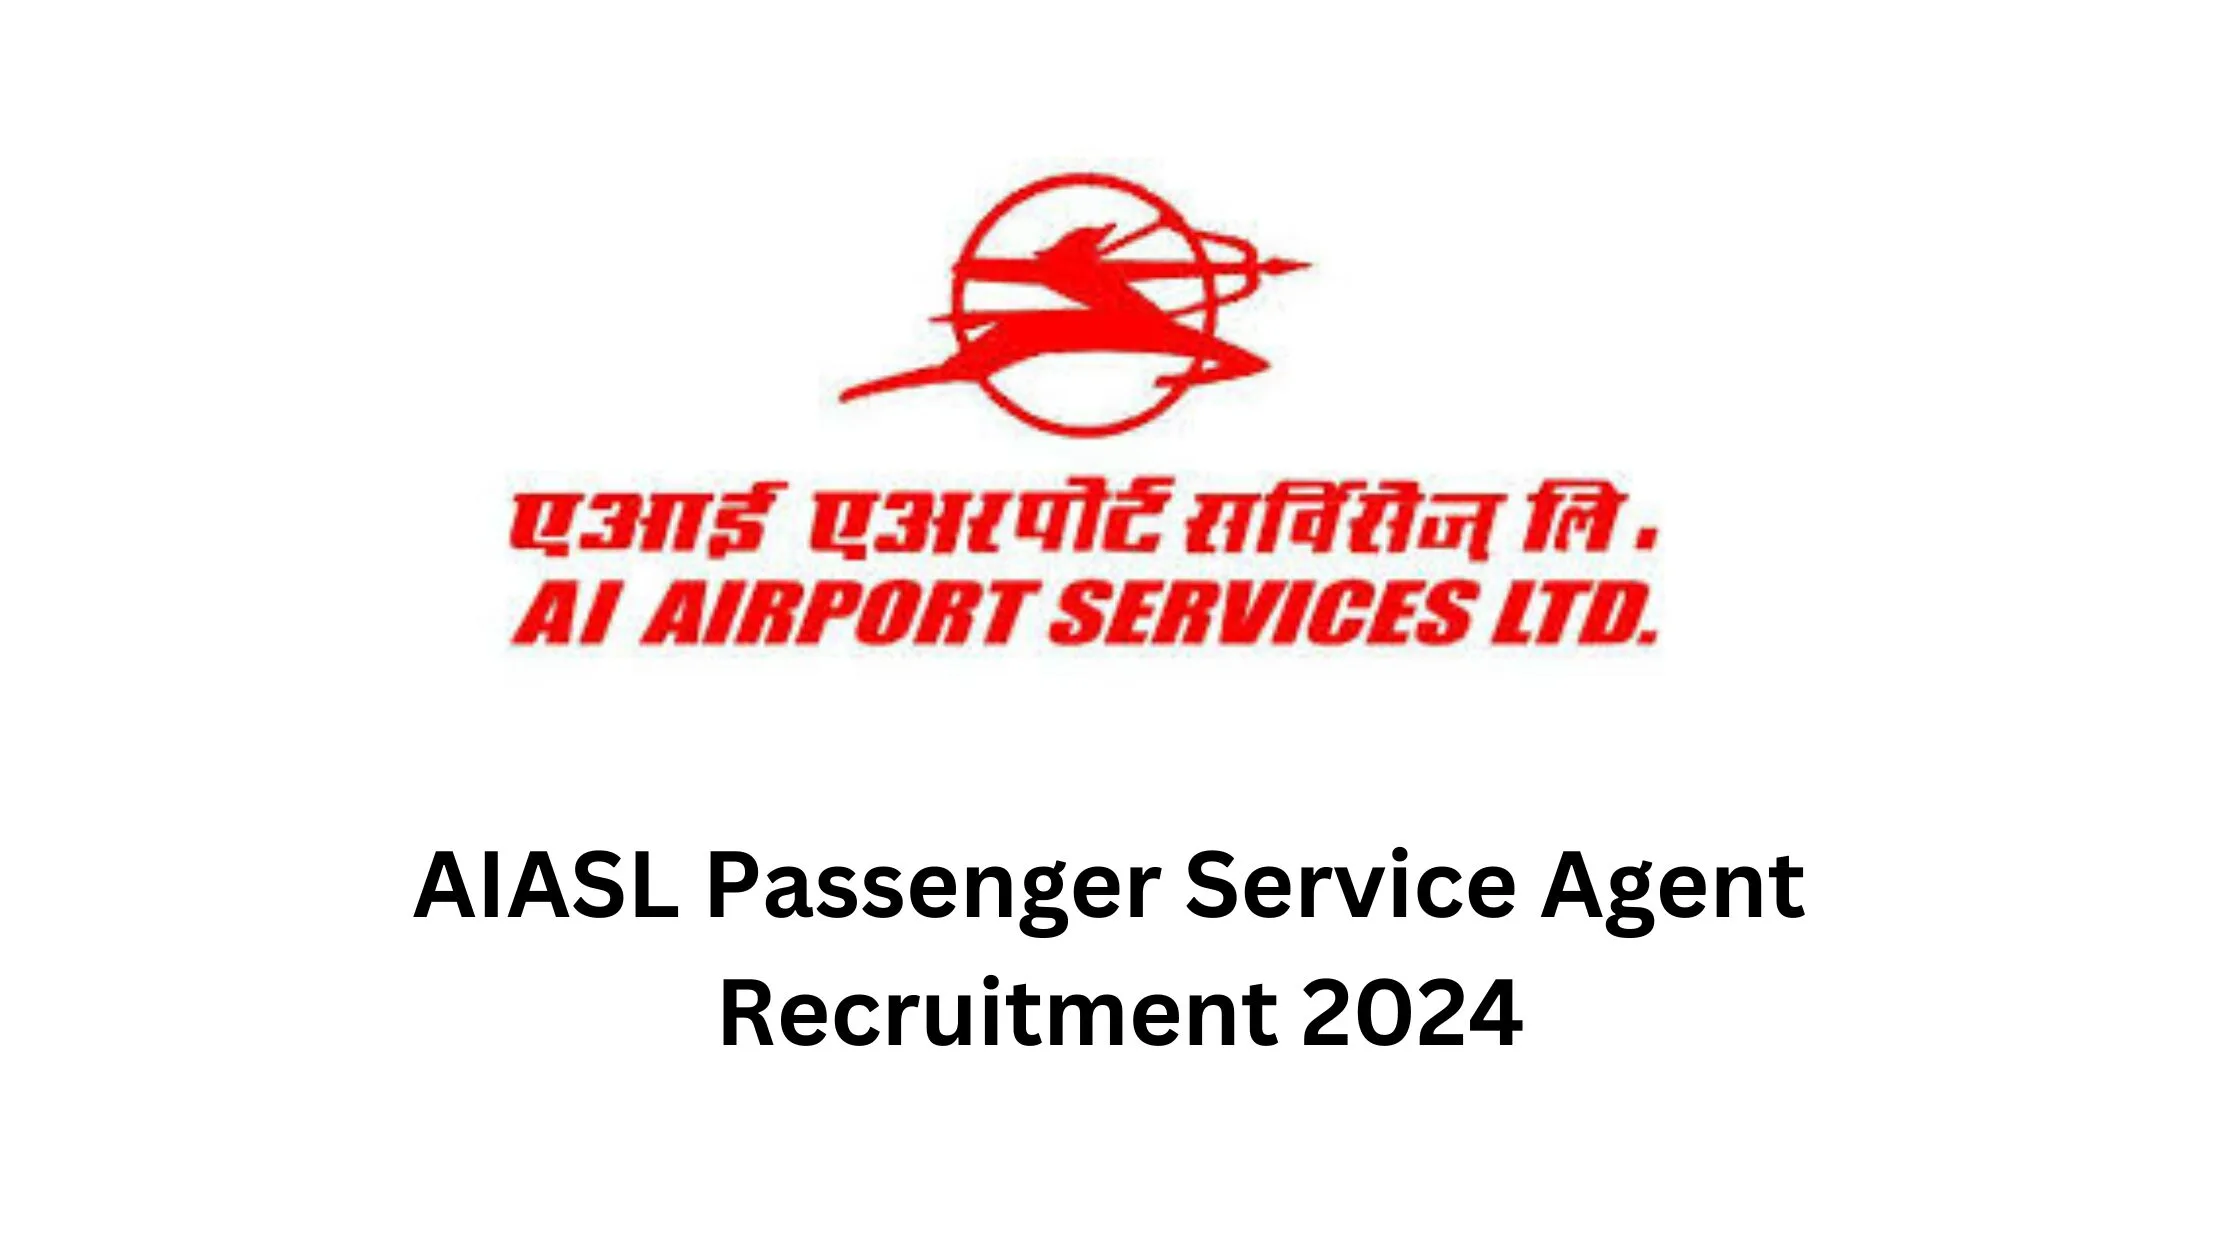 AIASL Passenger Service Agent Recruitment 2024